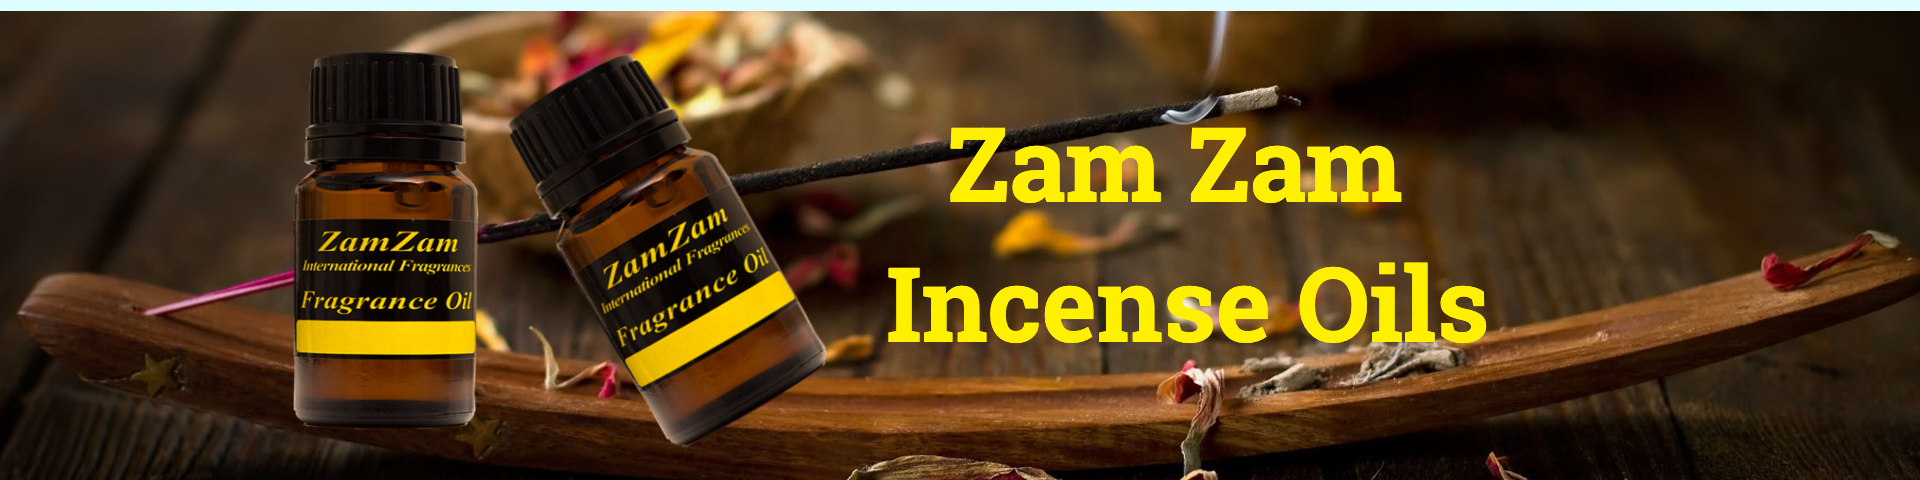 Zam Zam Incense Oils